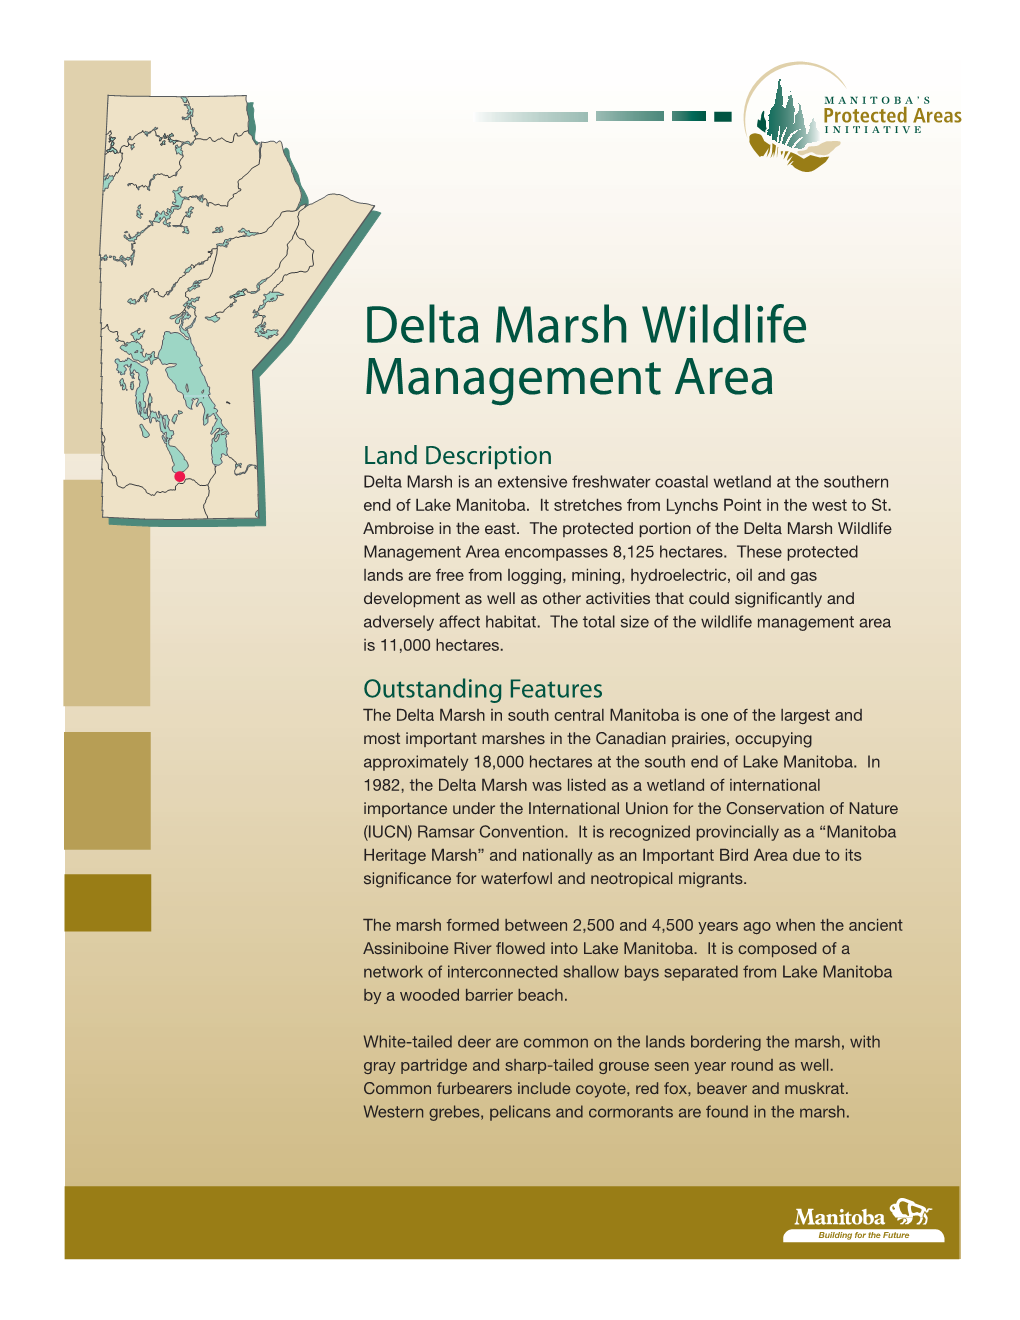 Delta Marsh Wildlife Management Area